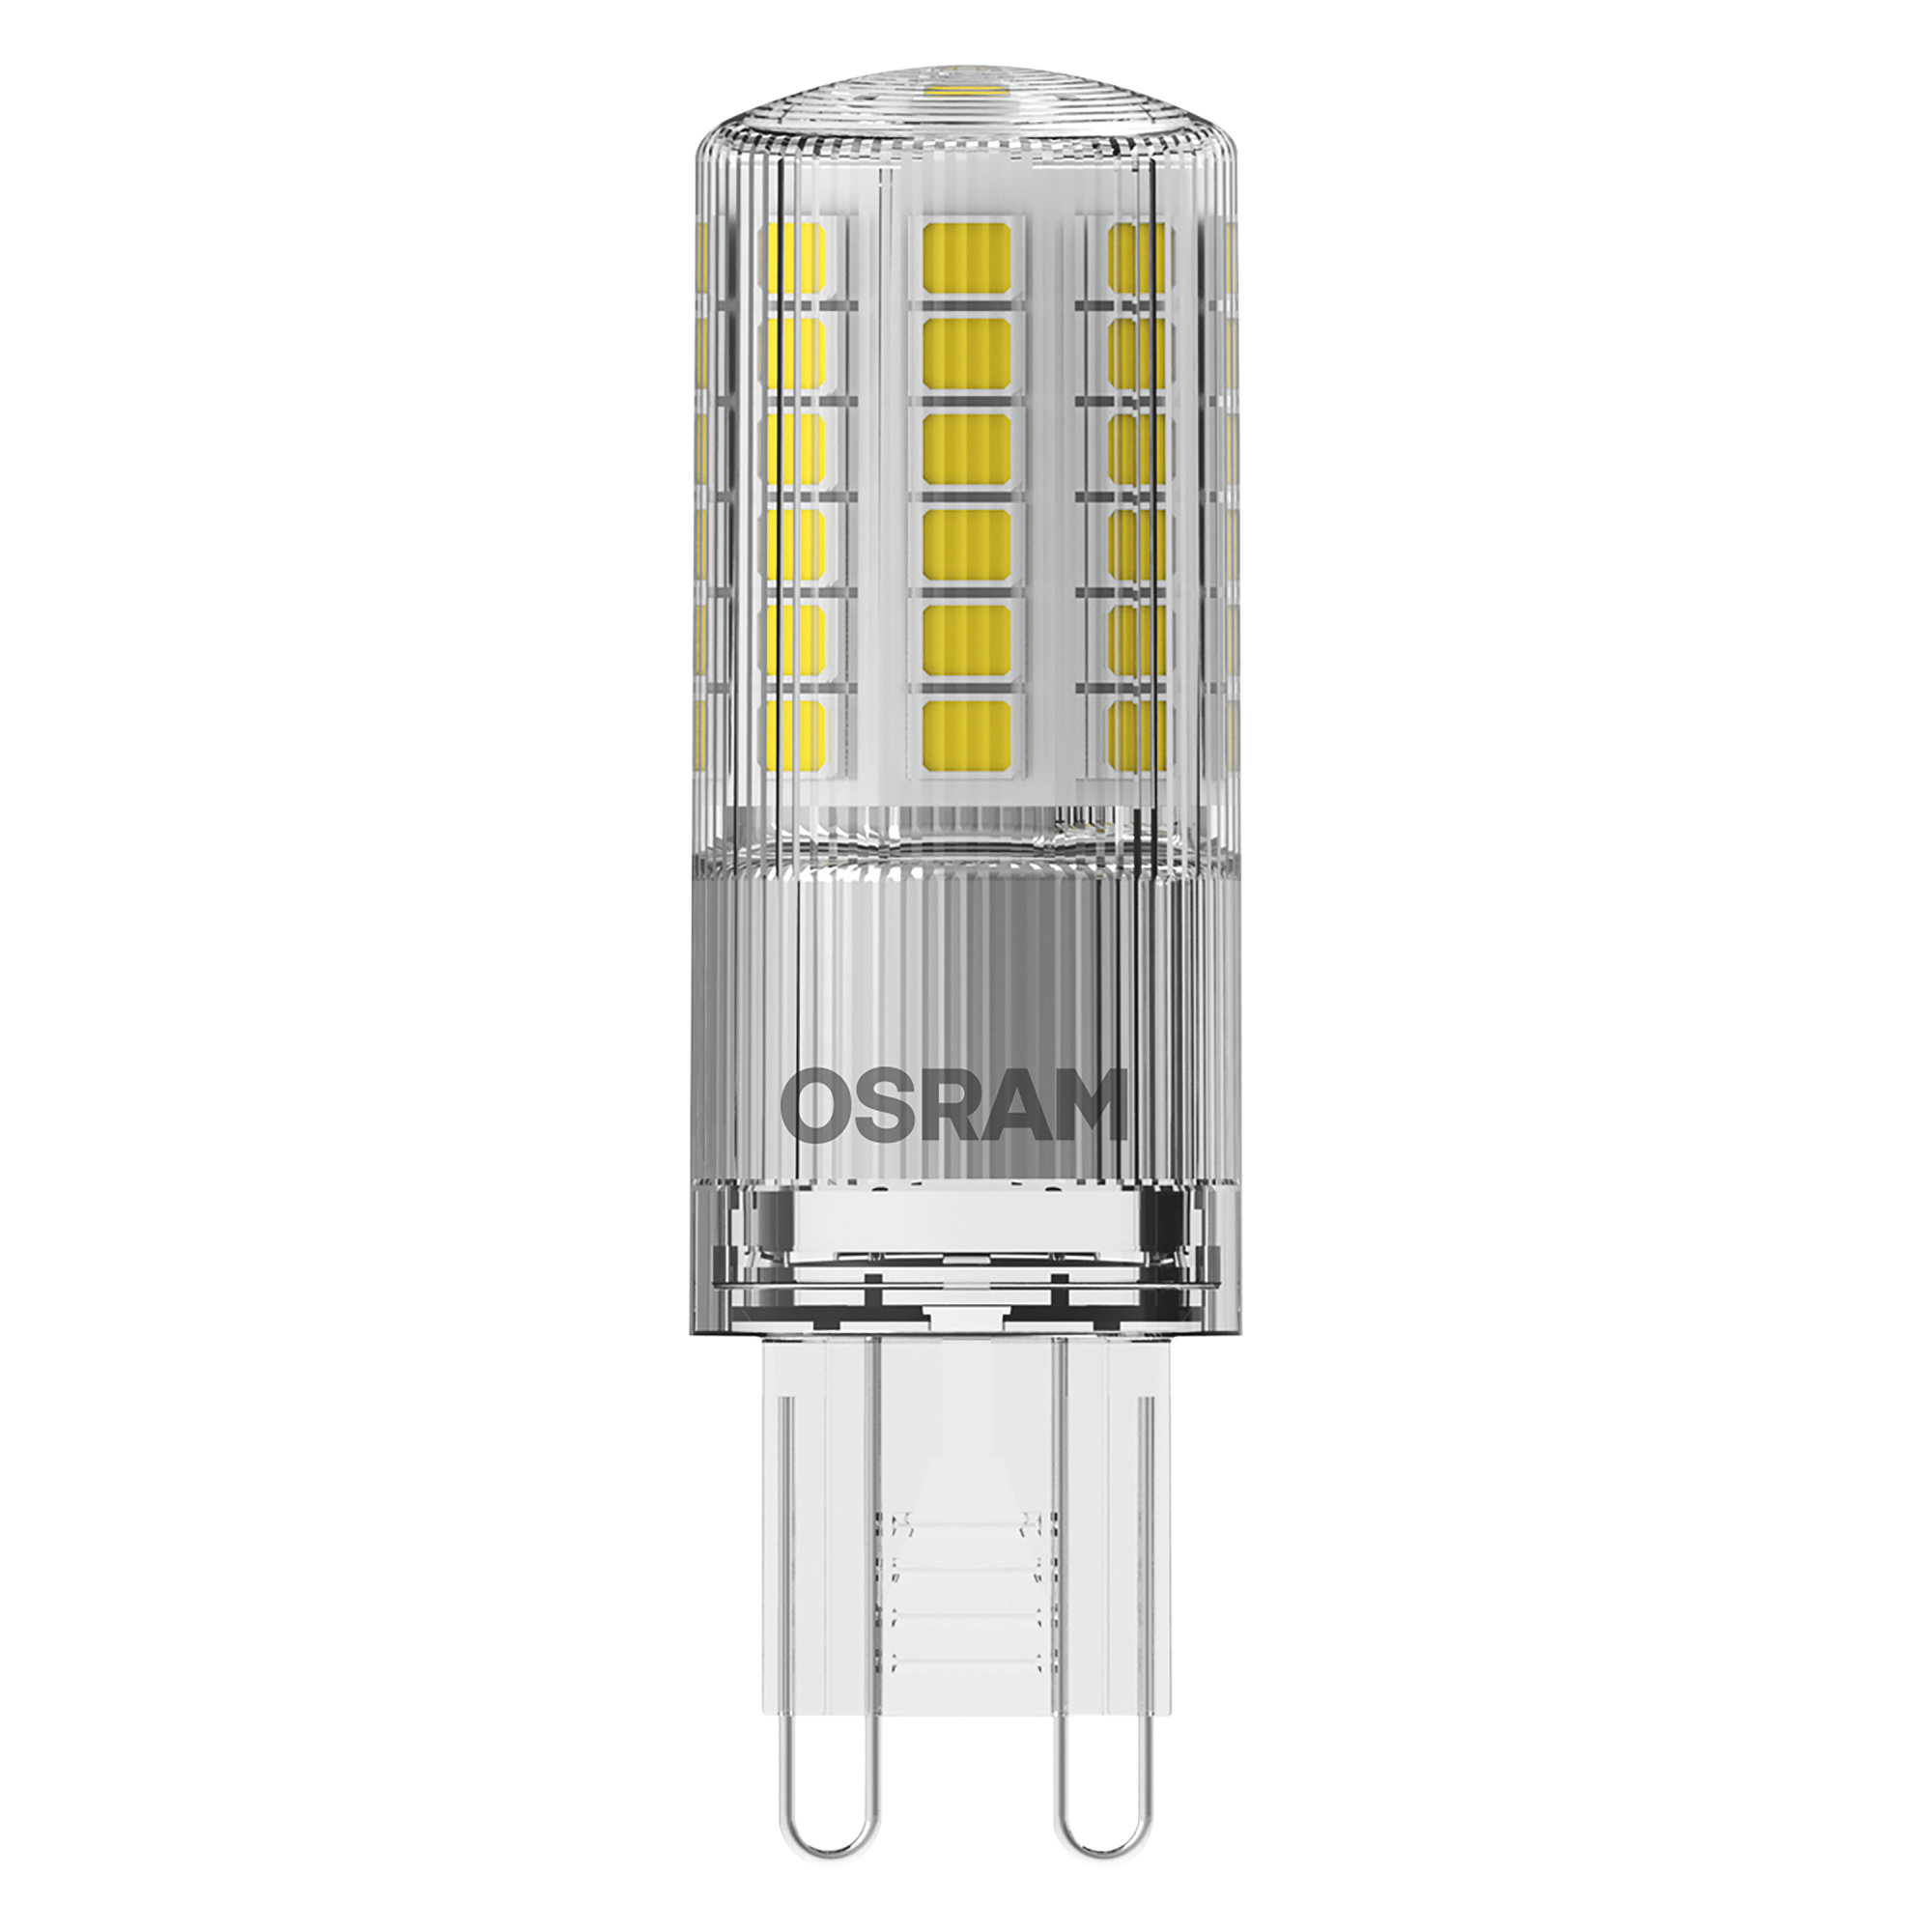 Bec Osram LED STAR PIN 48 clar non-dim 4.8W 827 G9 600lm 2700K